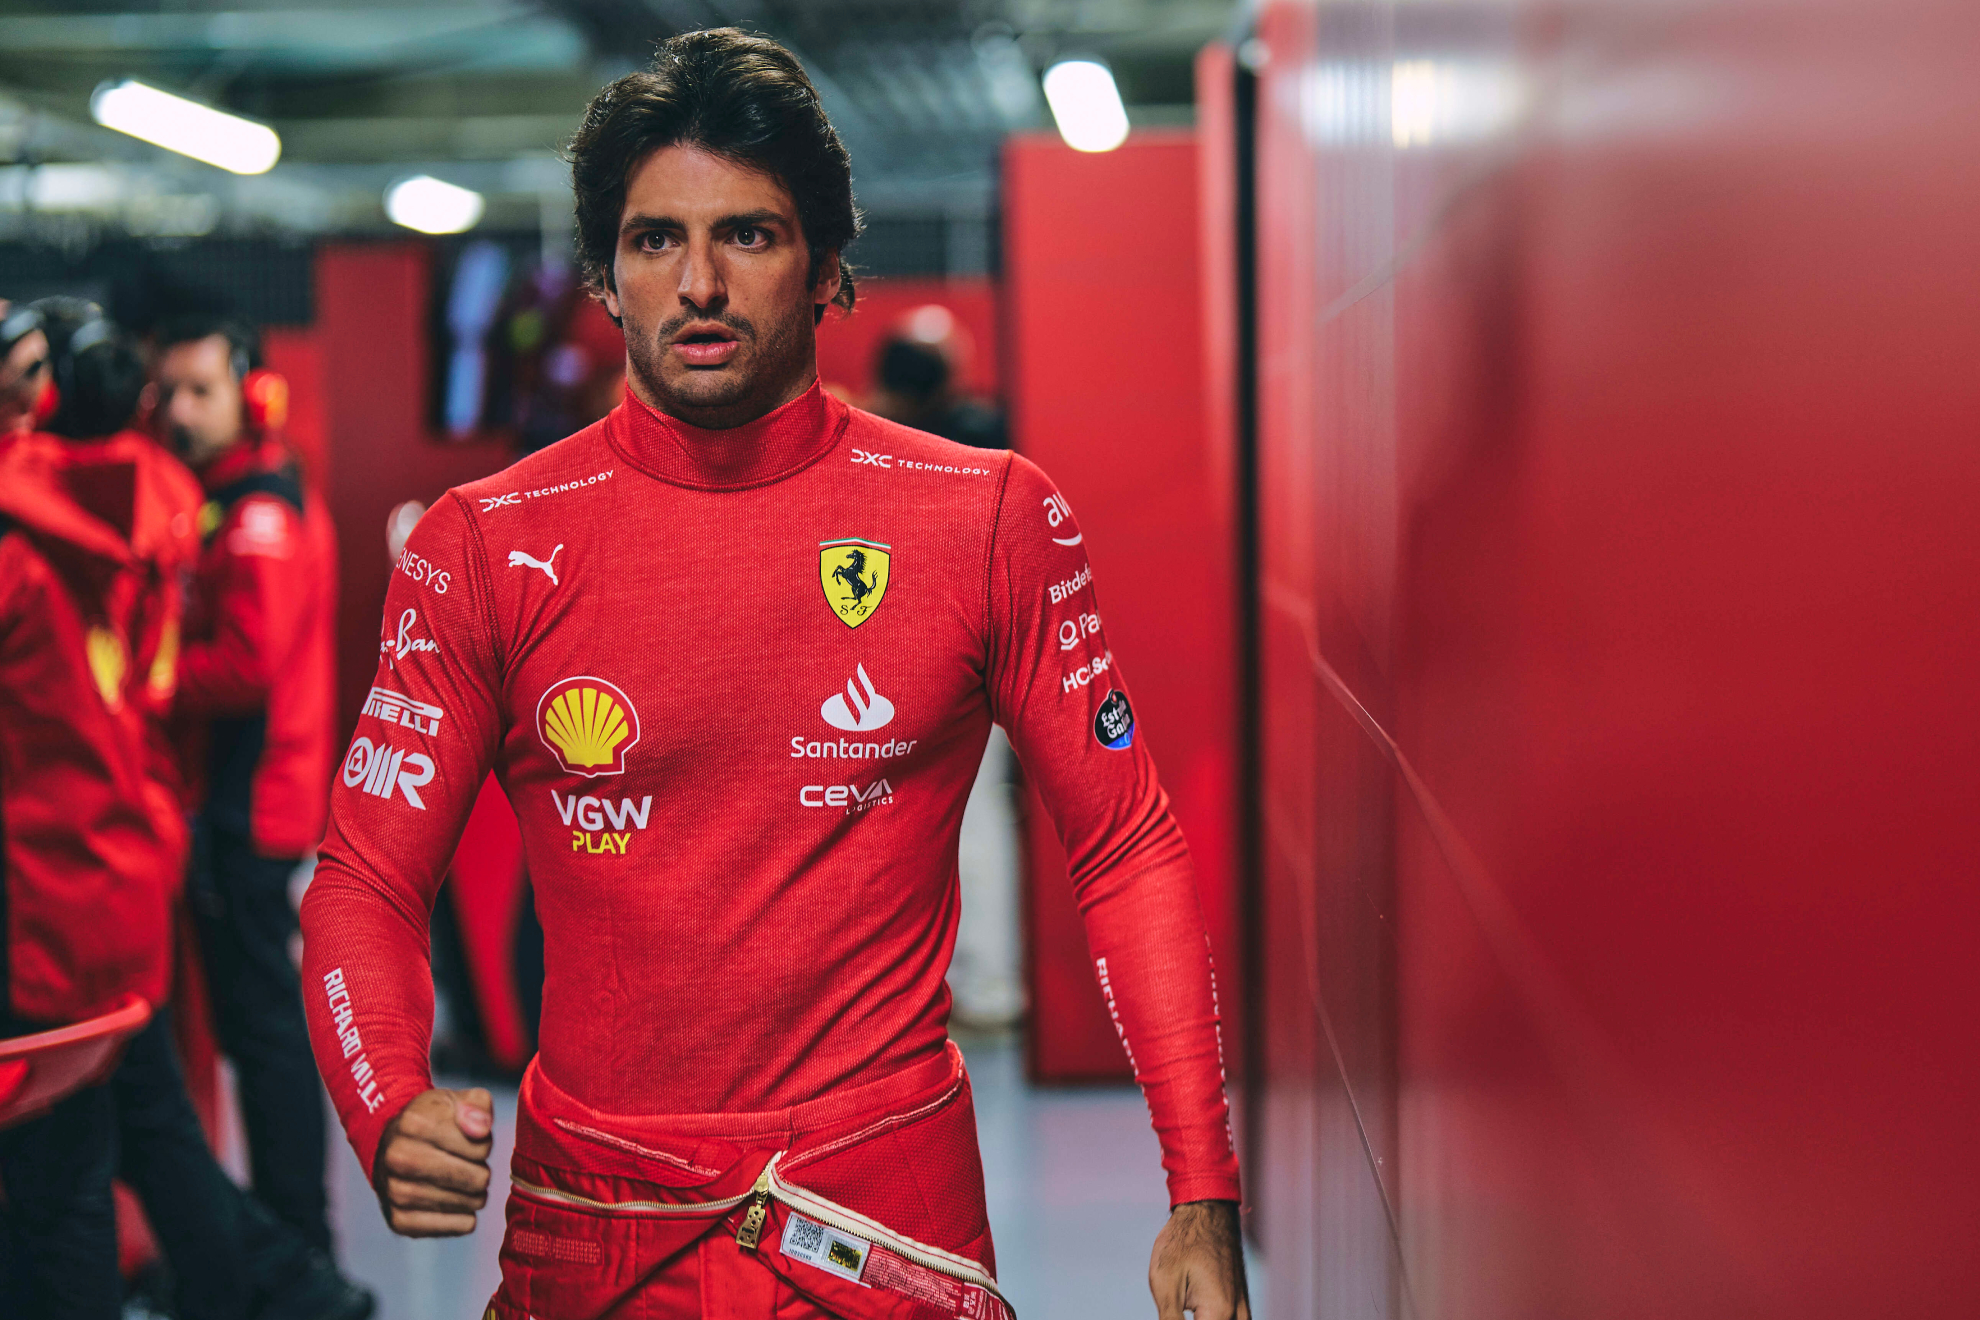 Carlos Sainz in the Ferrari garage